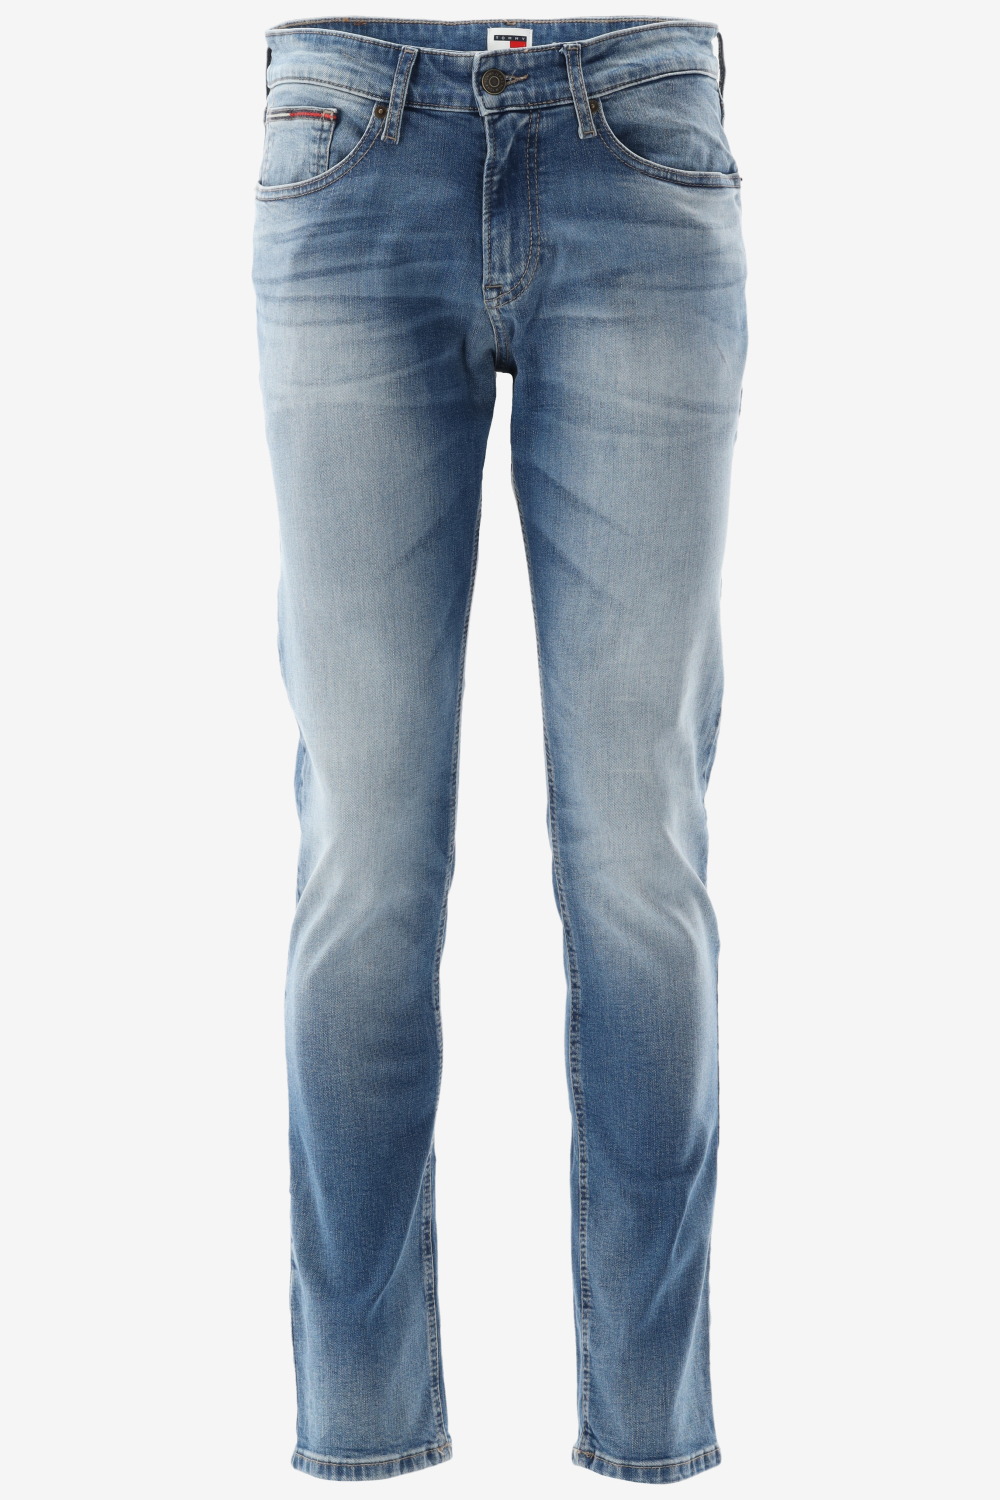 Tommy hilfiger slim fit scanton slim fit jeans maat 30-L34